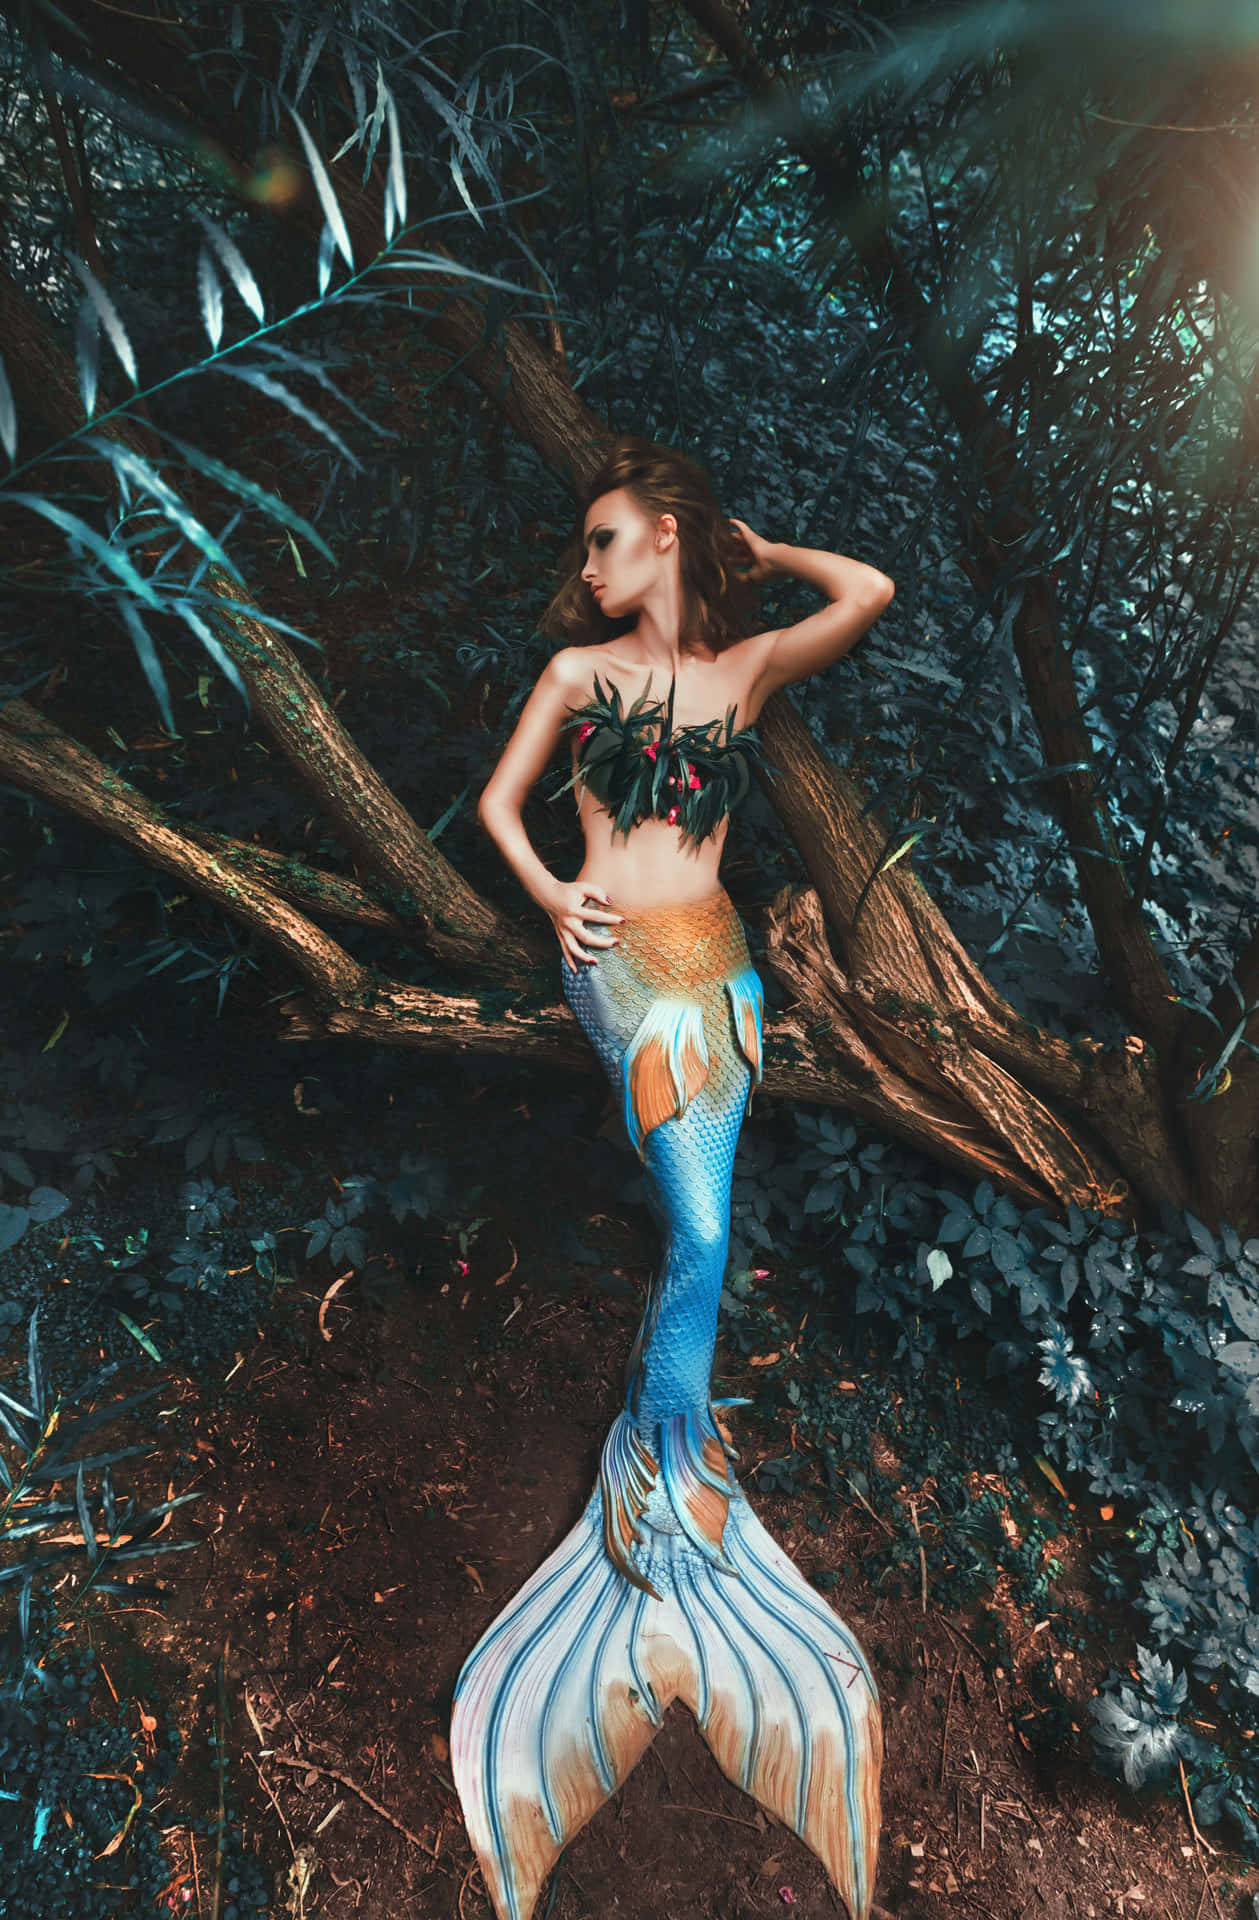 Real life mermaid - a beautiful dream comes true